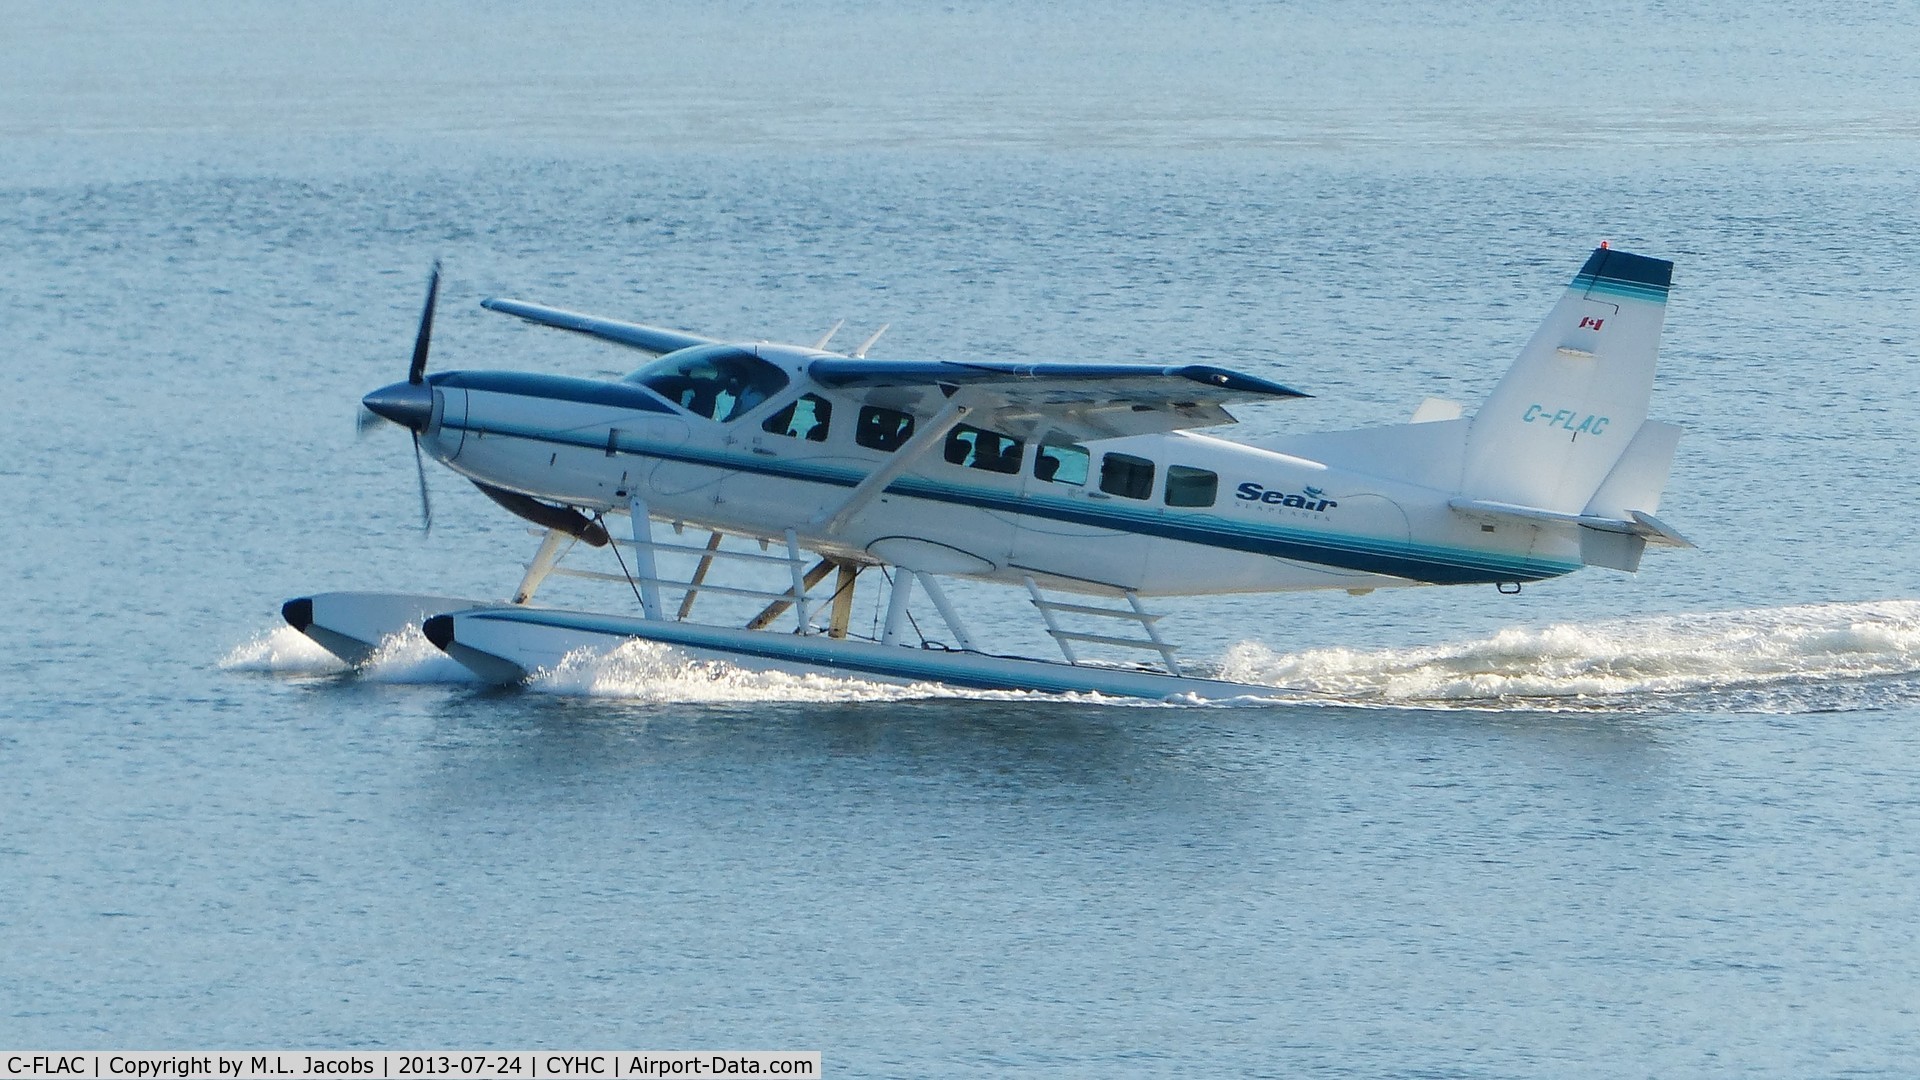 C-FLAC, 2002 Cessna 208 Caravan I C/N 20800357, Seair Seaplanes Cessna flight landing in Coal Harbour.